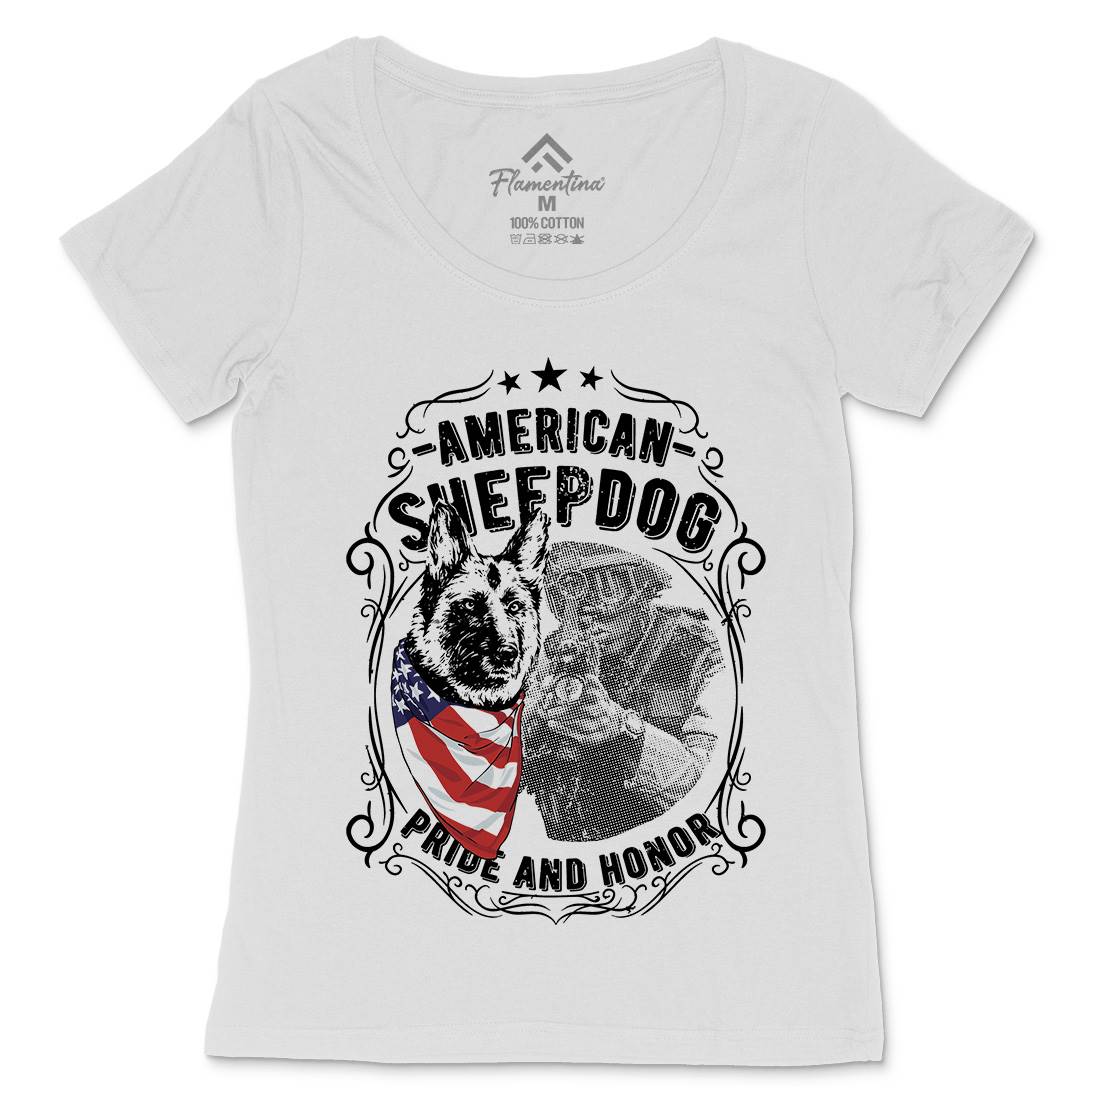 Sheepdog Womens Scoop Neck T-Shirt American C904